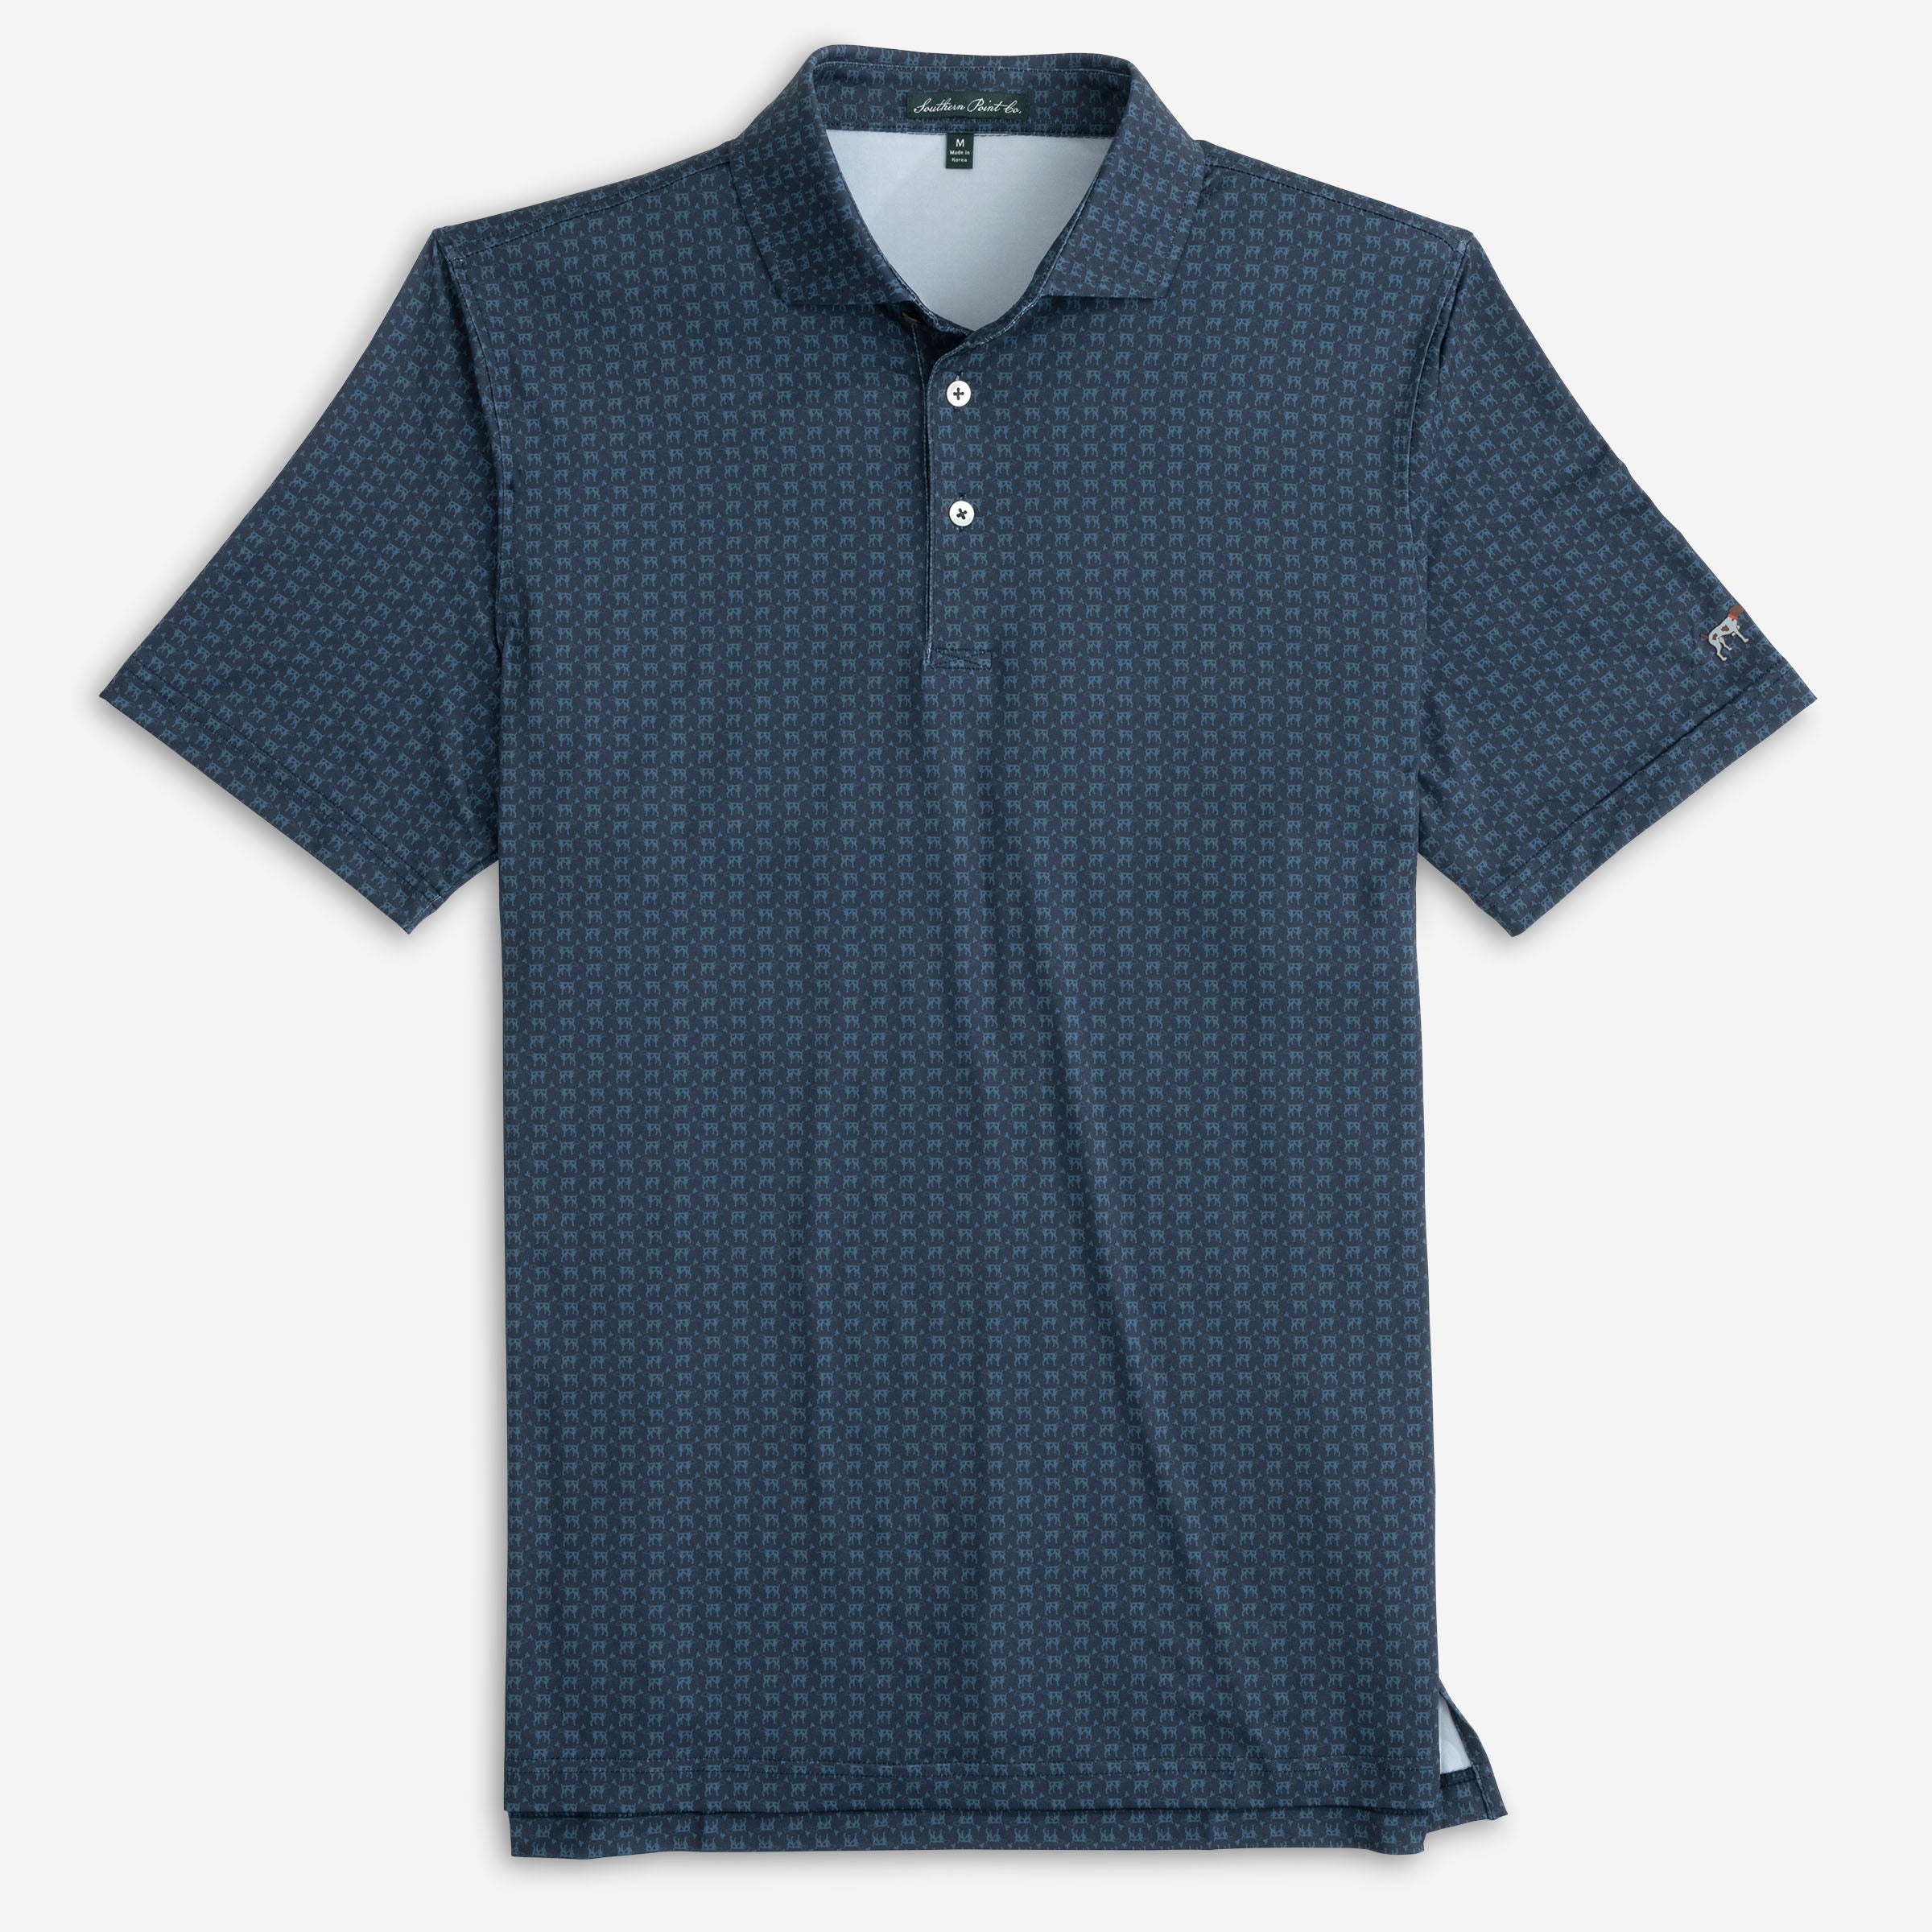 men's short sleeved heritage polo shirt